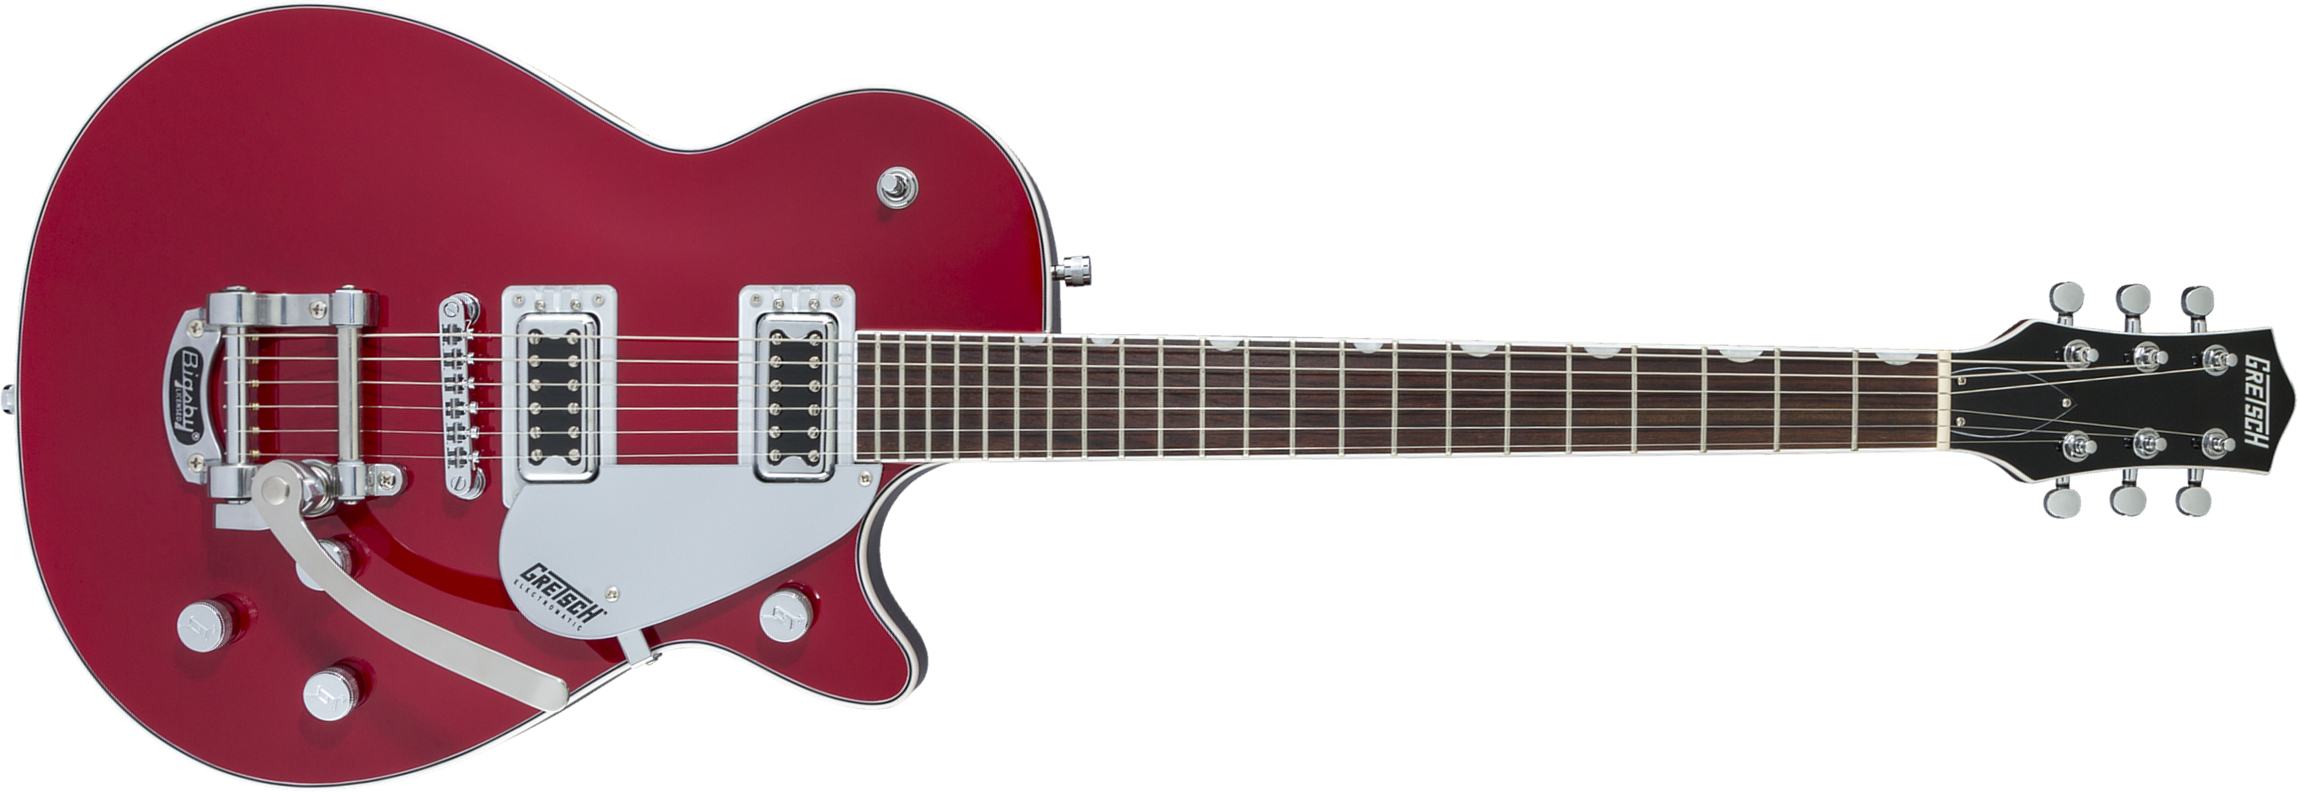 Gretsch G5230t Electromatic Jet Ft Single-cut Bigsby Hh Trem Wal - Firebird Red - Enkel gesneden elektrische gitaar - Main picture